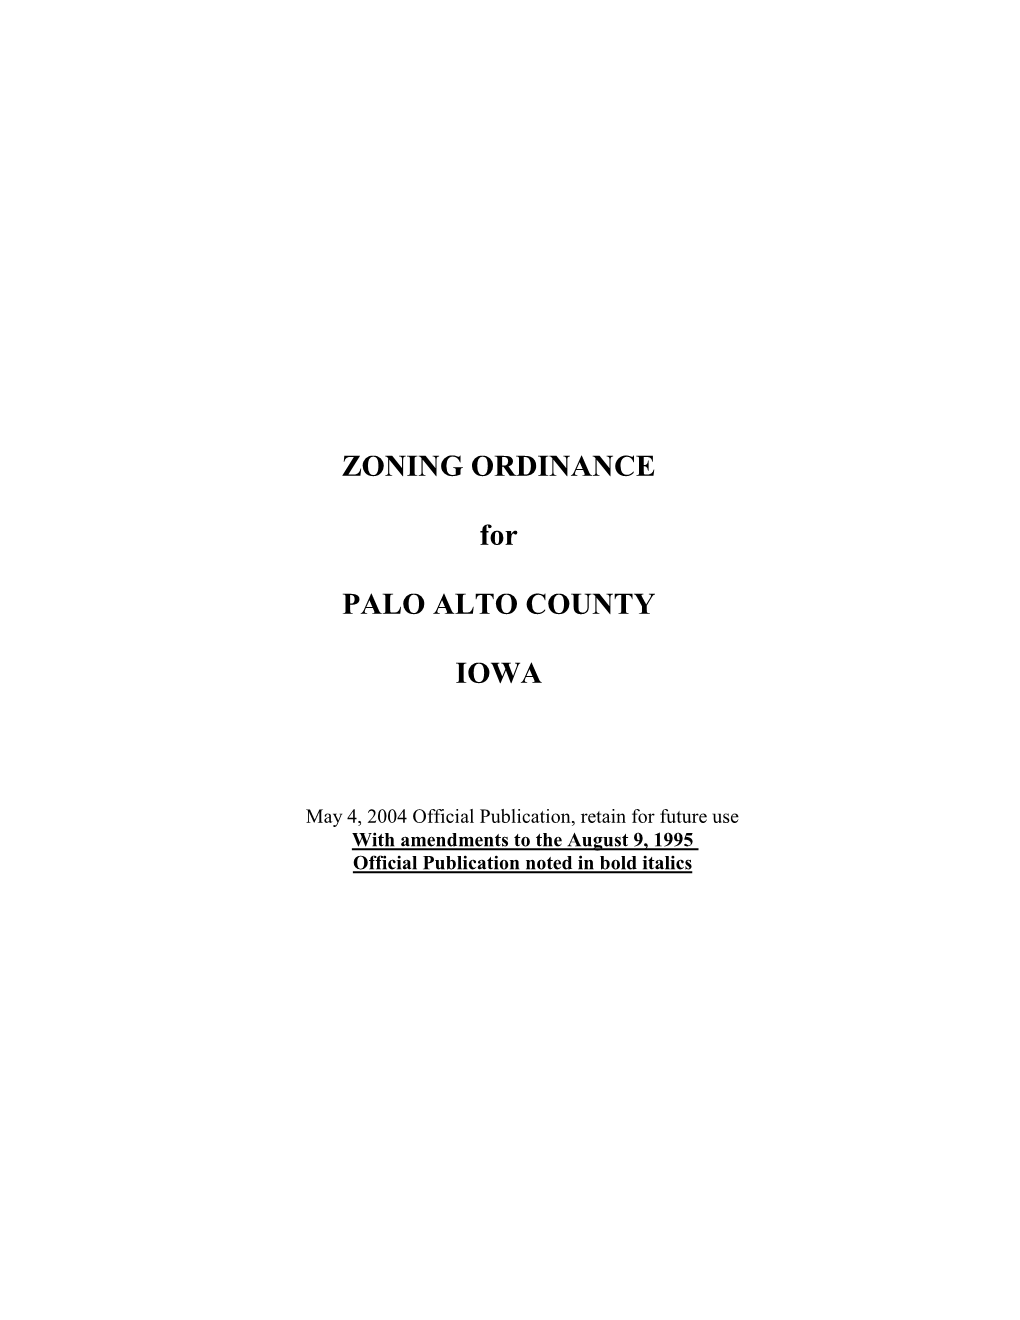 ZONING ORDINANCE for PALO ALTO COUNTY IOWA